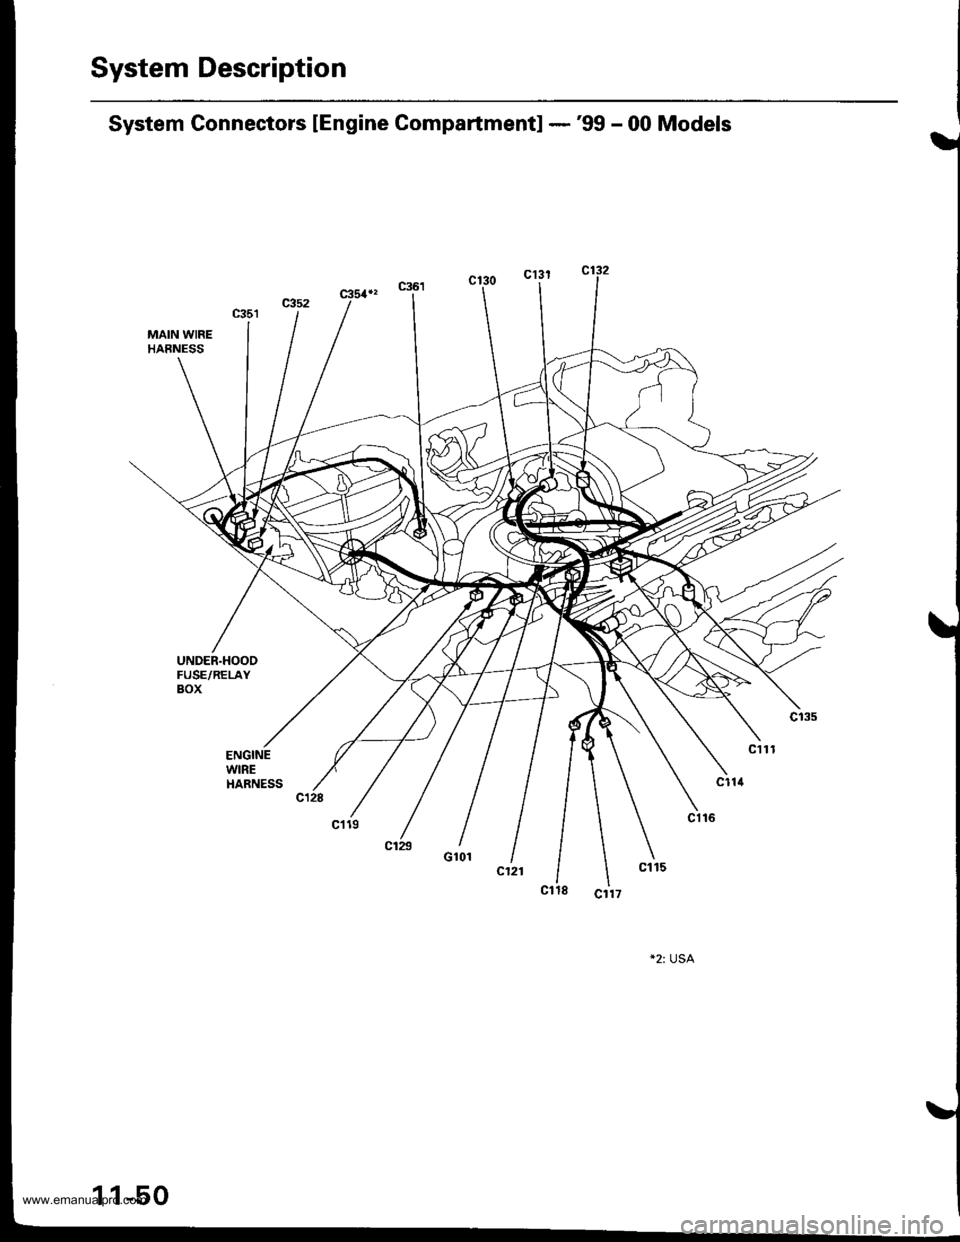 HONDA CR-V 1997 RD1-RD3 / 1.G User Guide 
System Description
System Gonnectors lEngine Compartment] -99 - 00 Models
MAIN WIREHAENESS
UNDER.HOOOFUSE/RELAYBOX
ENGINEWIREHARNESS
www.emanualpro.com  